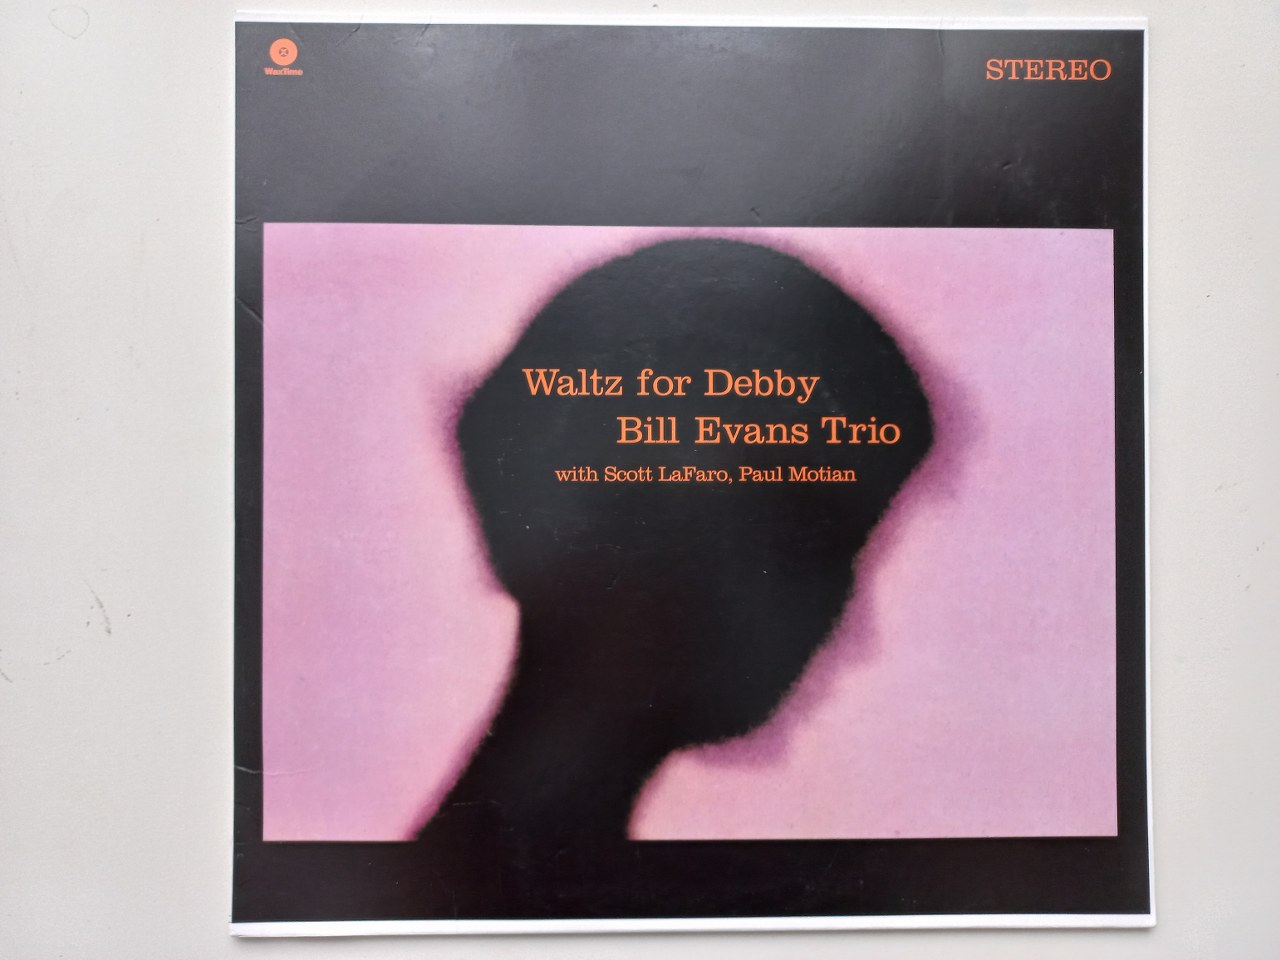 8436028699902 Bill Evans Trio* – Waltz For Debby Vinyl LP Album Reissue Remastered Limited Edition Stereo, 180 Gram 2012